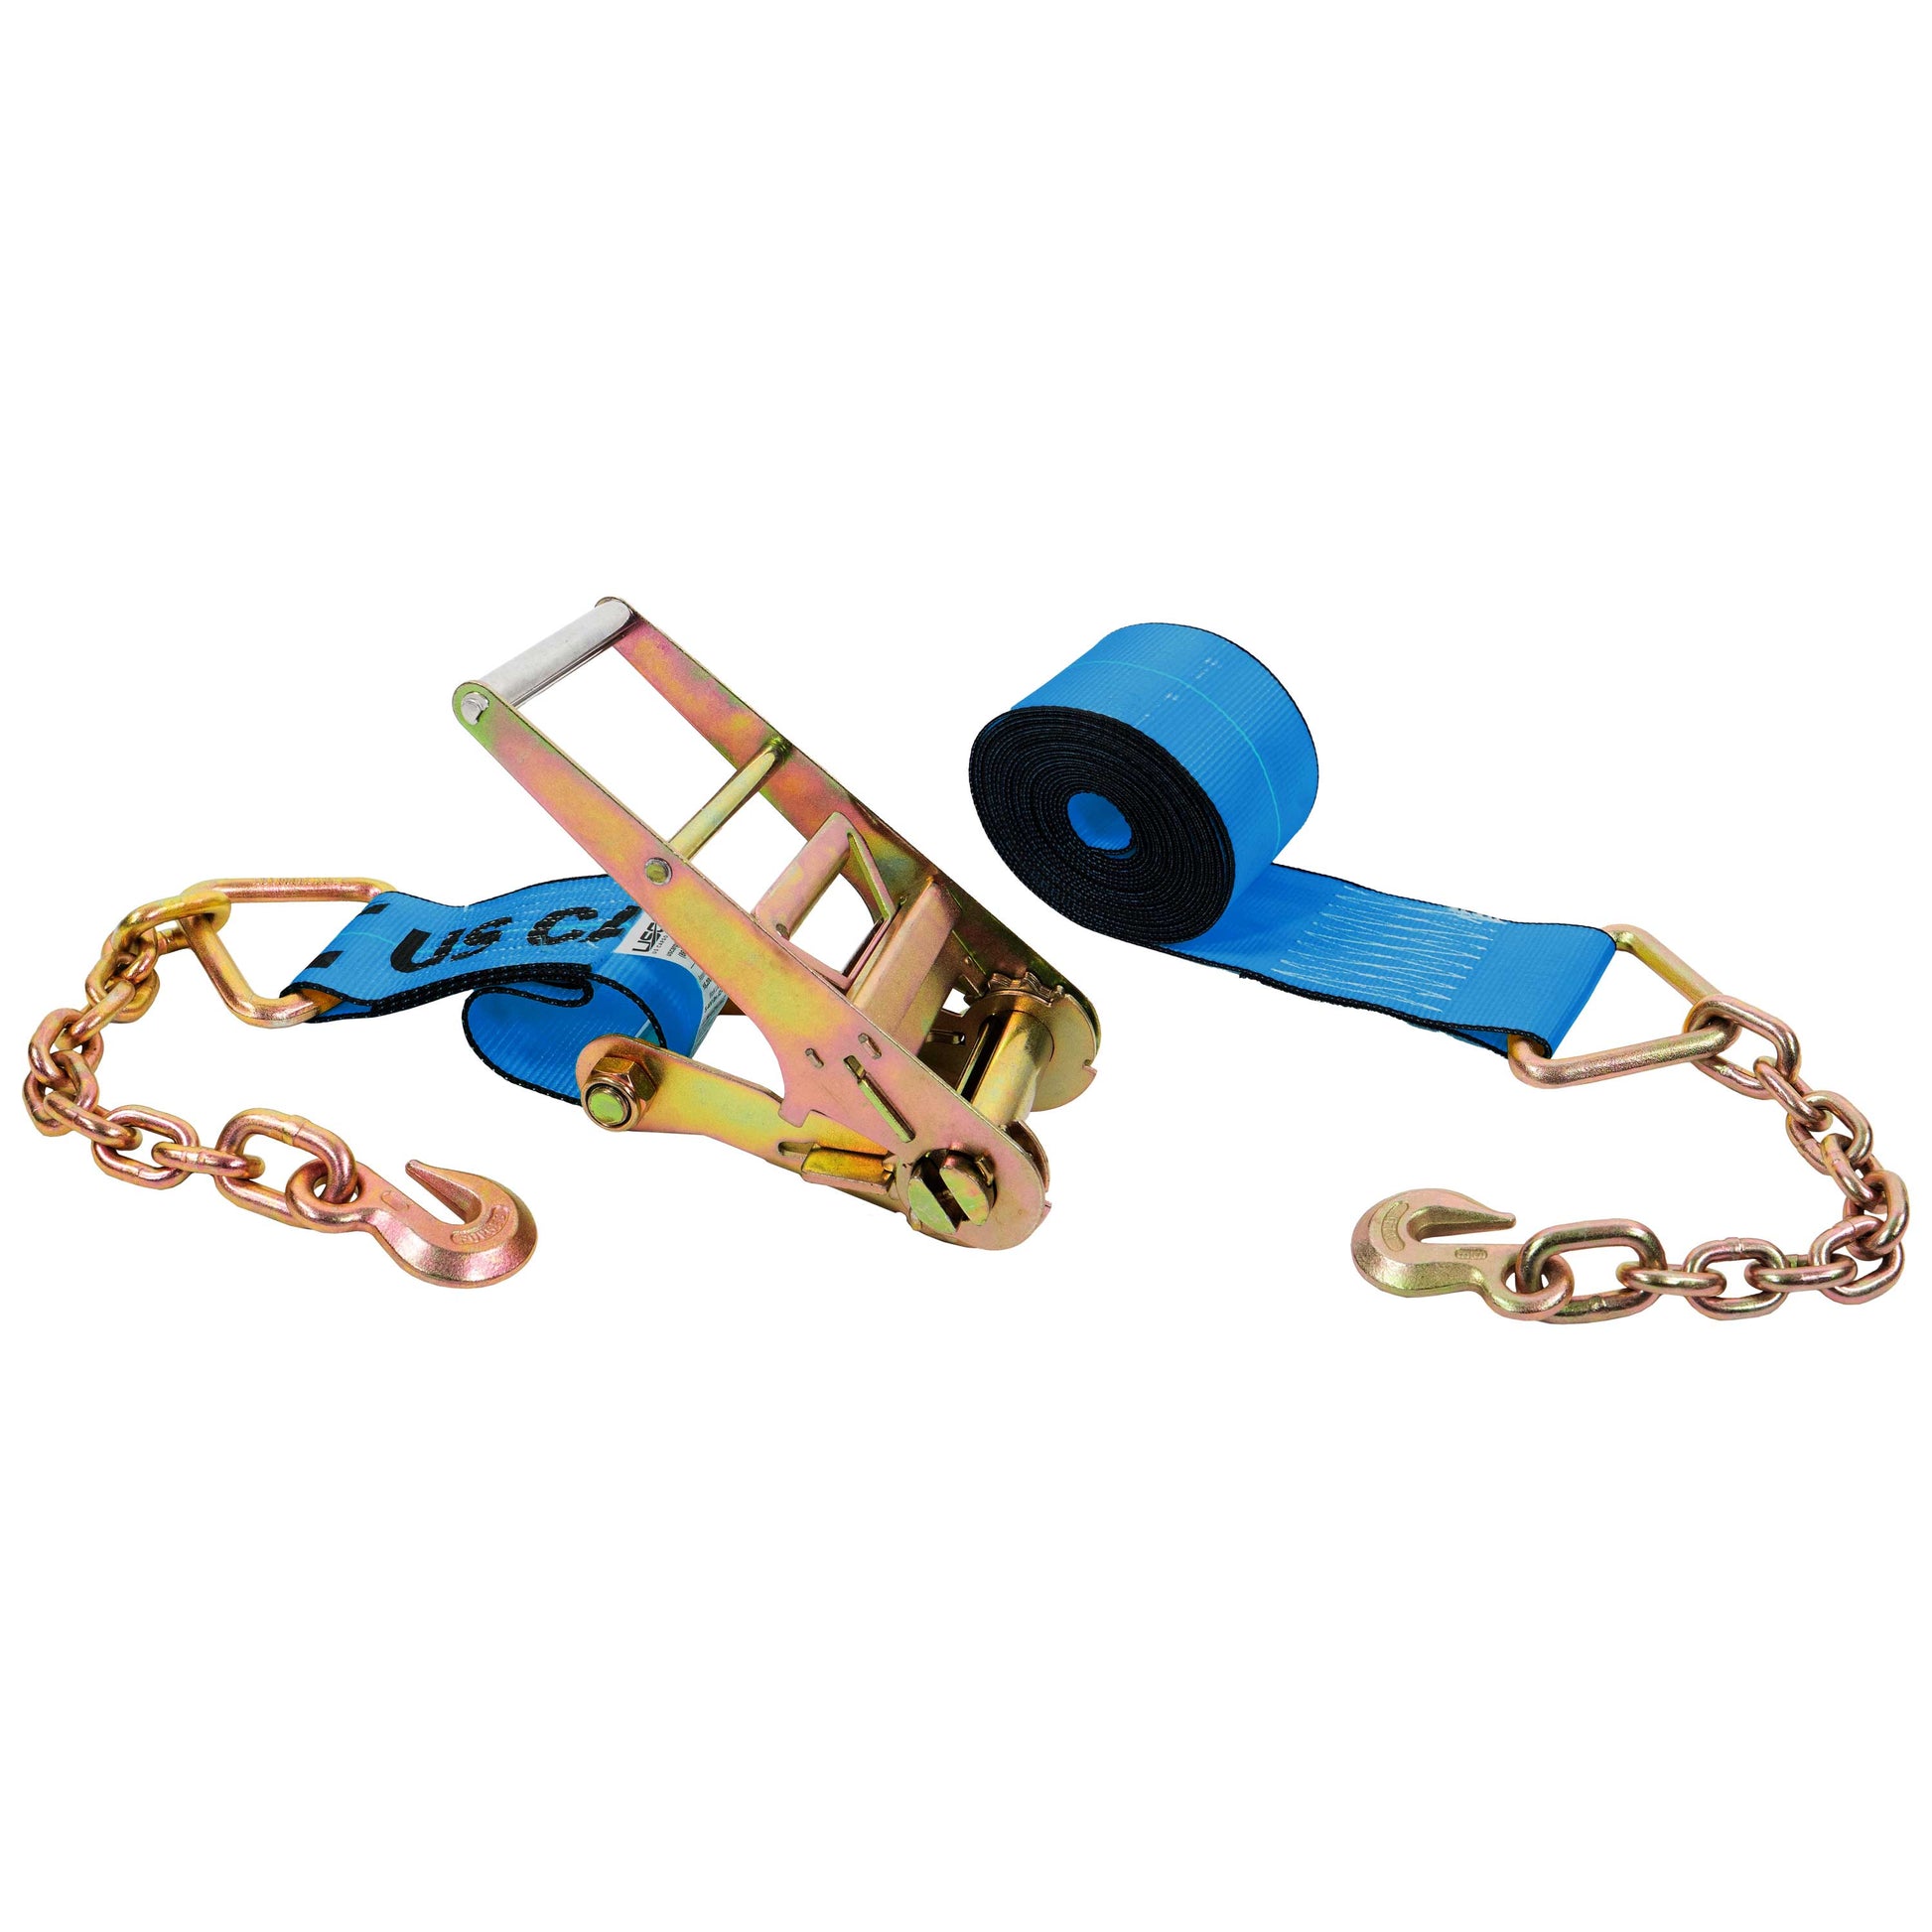 50' 4" heavy-duty blue chain extension ratchet strap